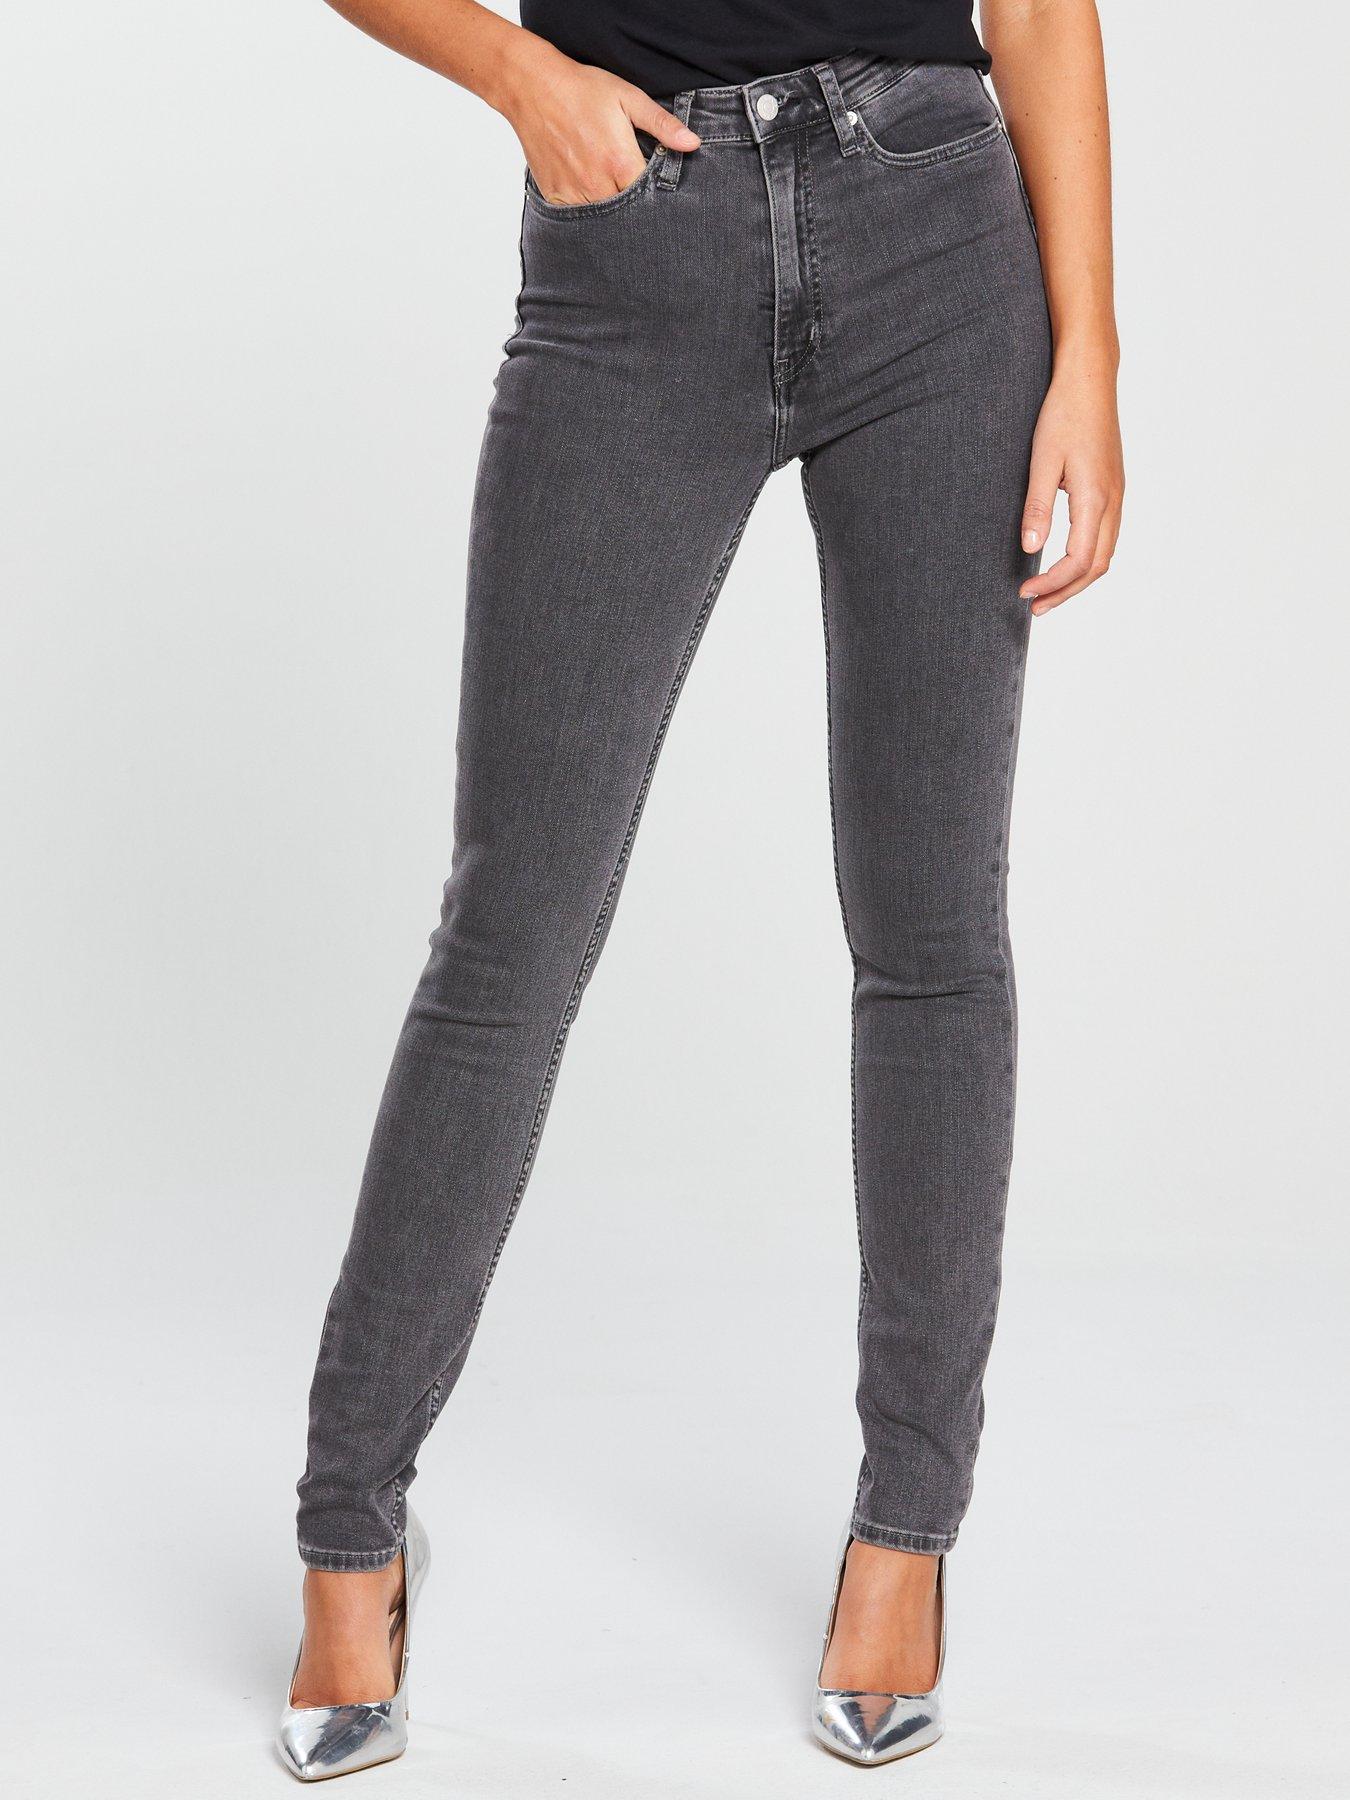 grey high waisted skinny jeans